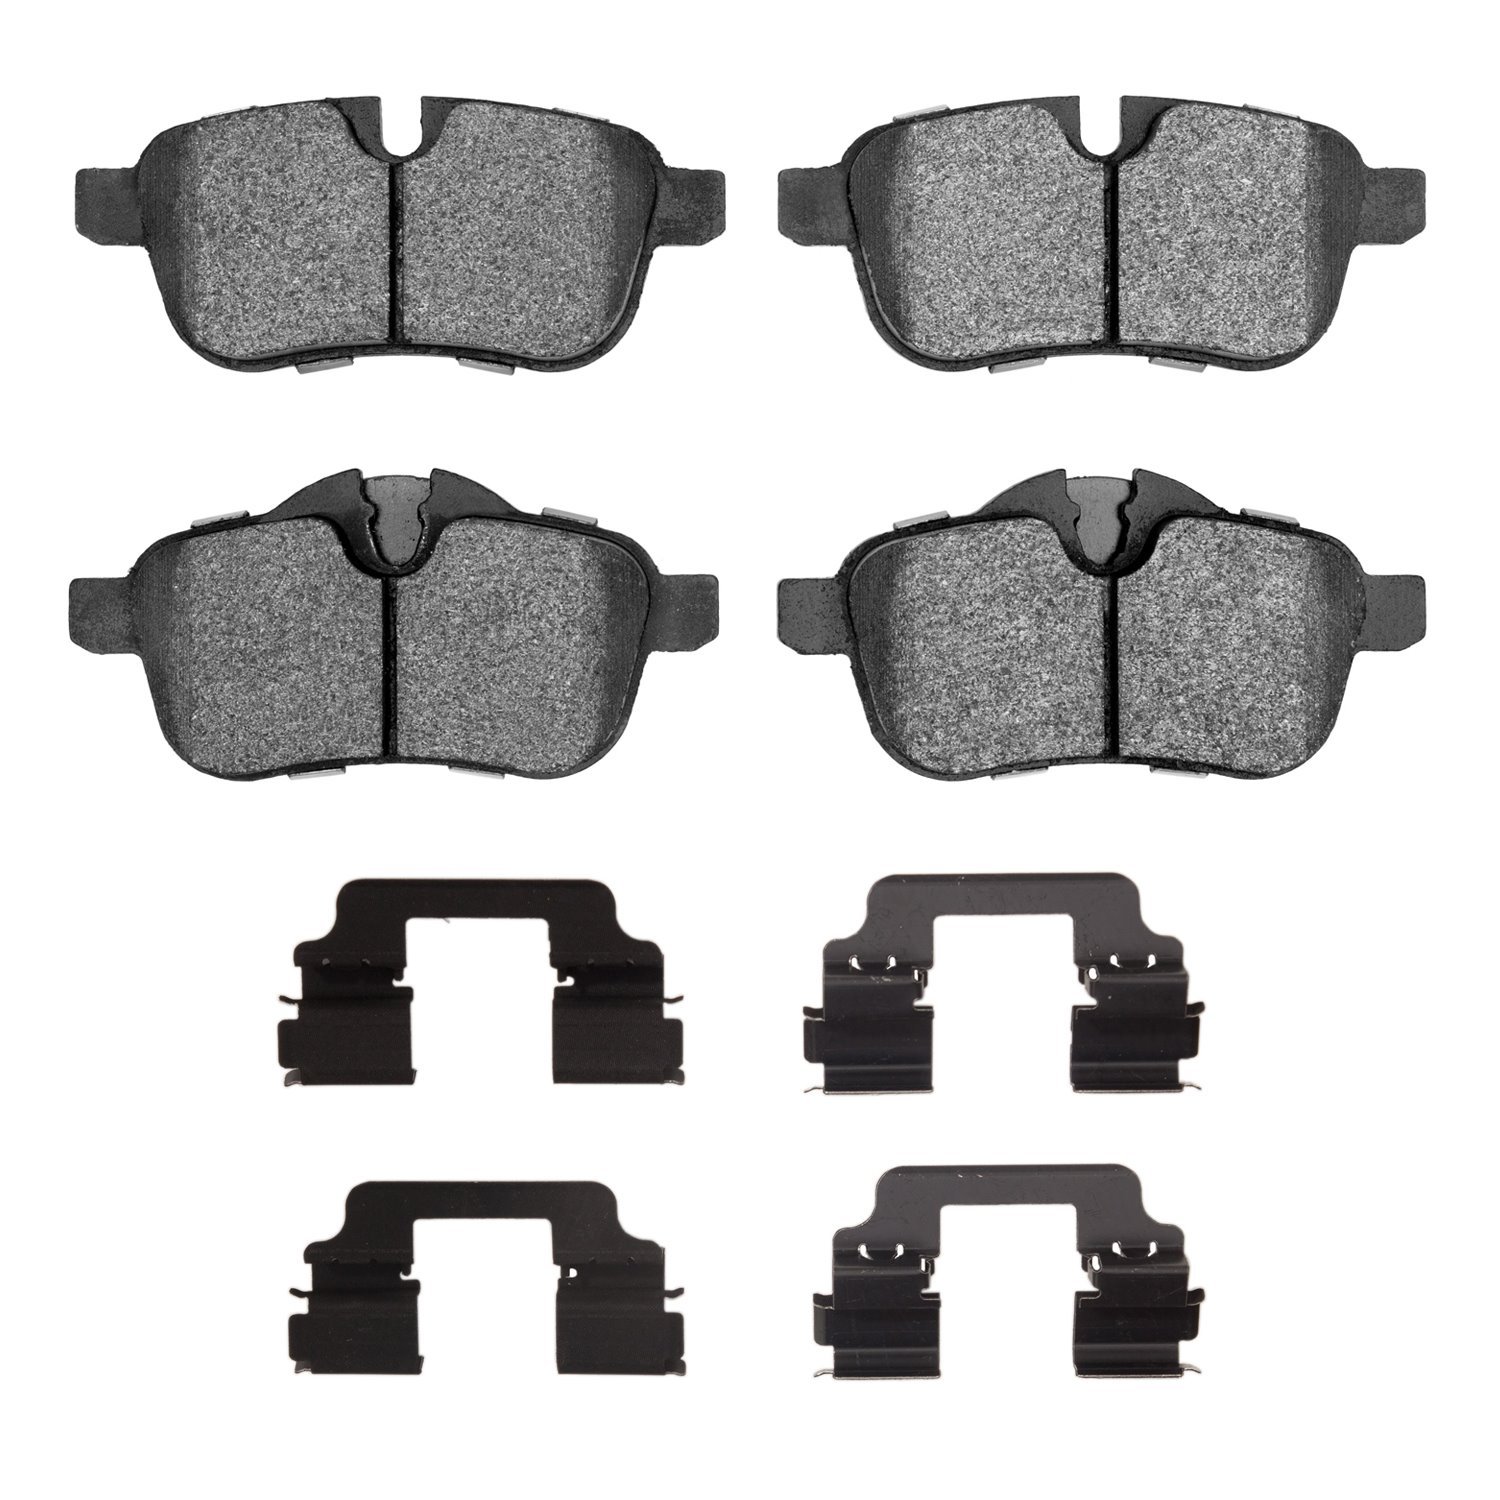 1552-1433-01 5000 Advanced Ceramic Brake Pads & Hardware Kit, Fits Select BMW, Position: Rear